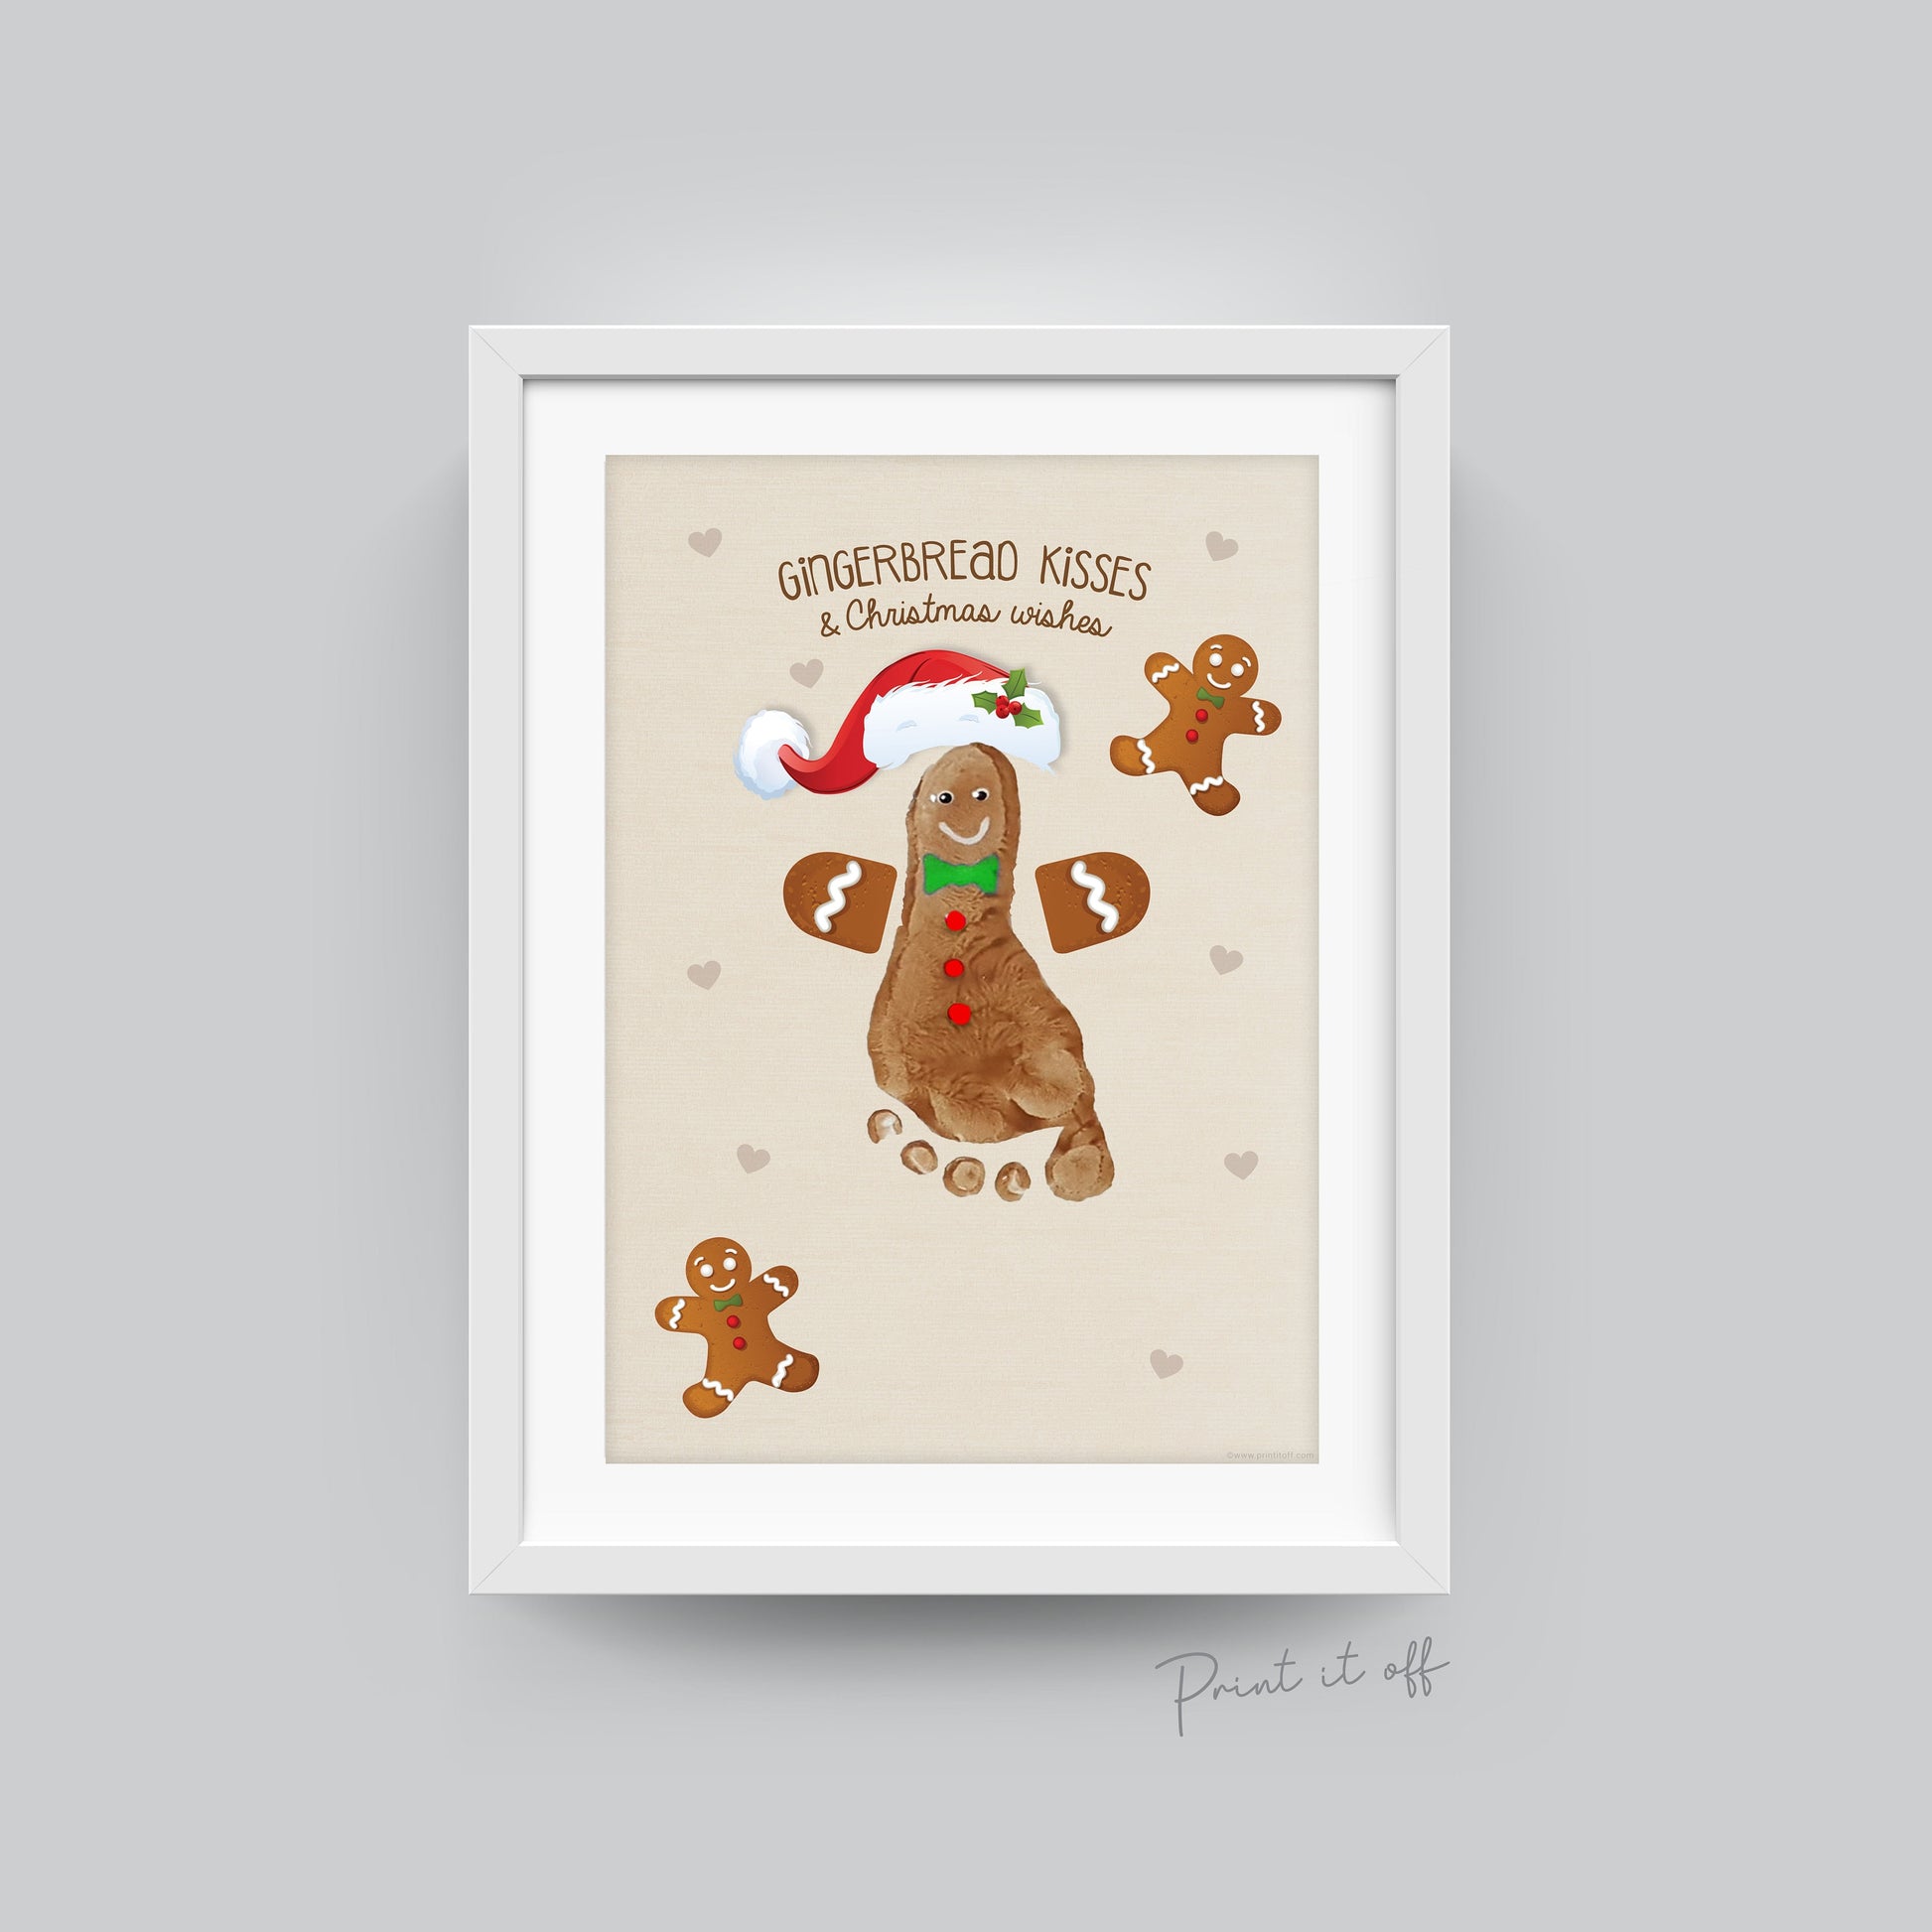 Gingerbread Man Kisses Christmas Wishes Footprint Handprint Art Craft / First Xmas Baby Kids DIY Card Memory Gift / Print It Off 0663